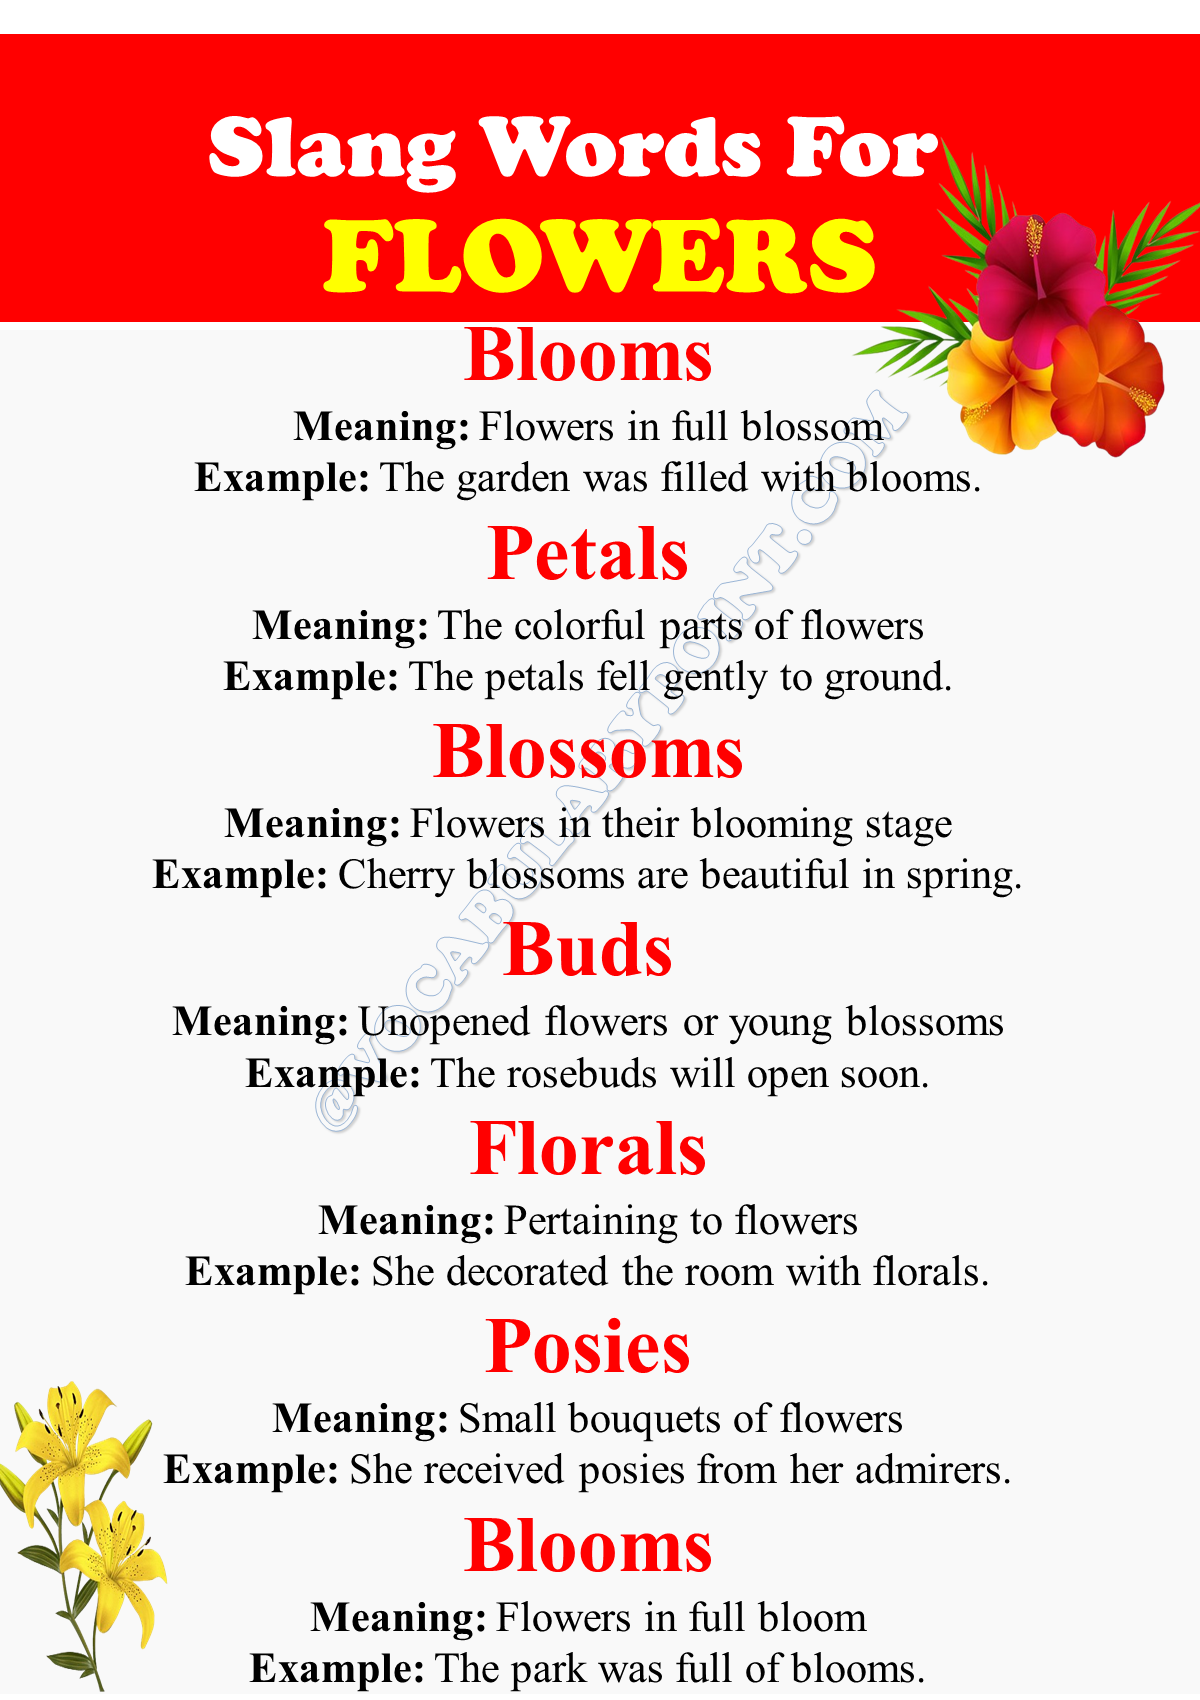 Slang Words For Flowers